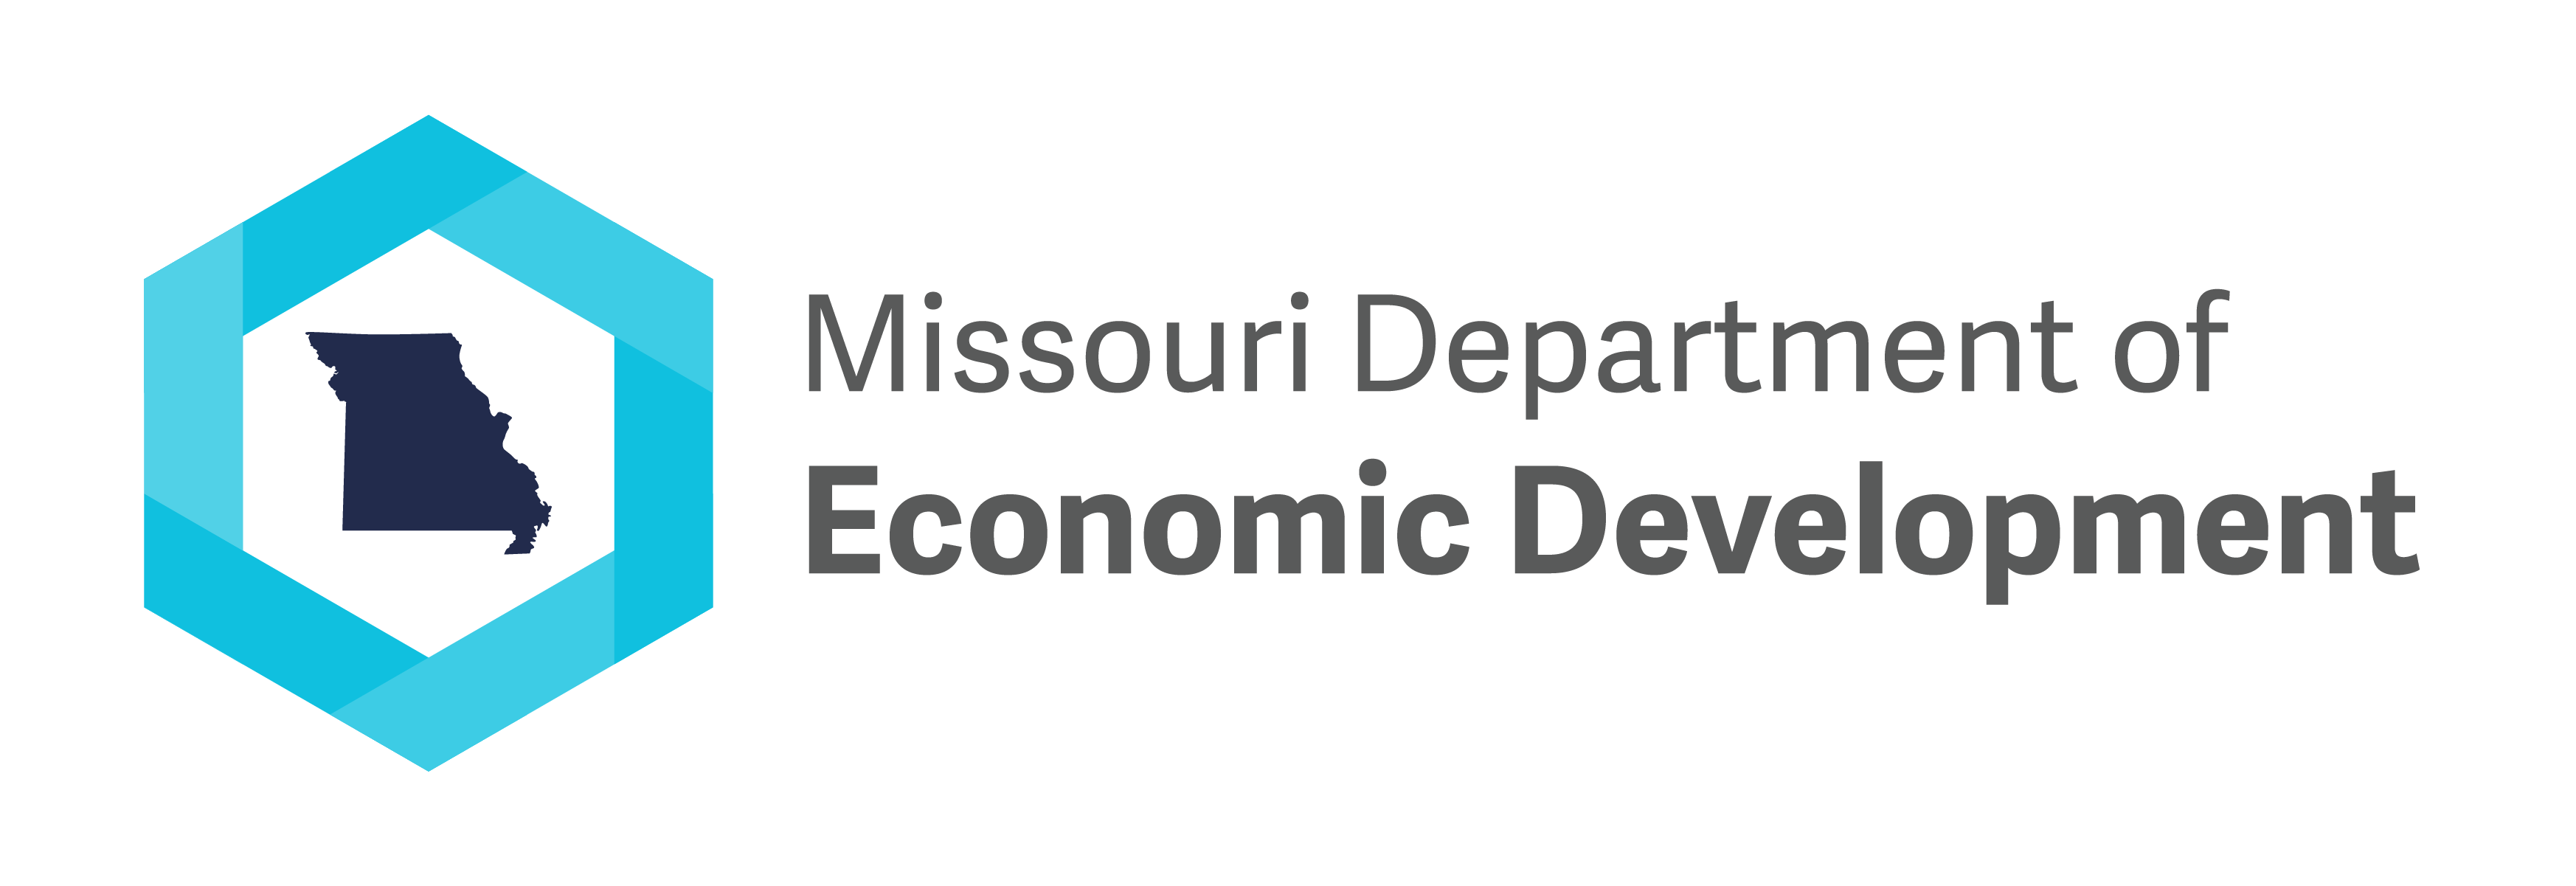 Missouri Department of Economic Development Logo